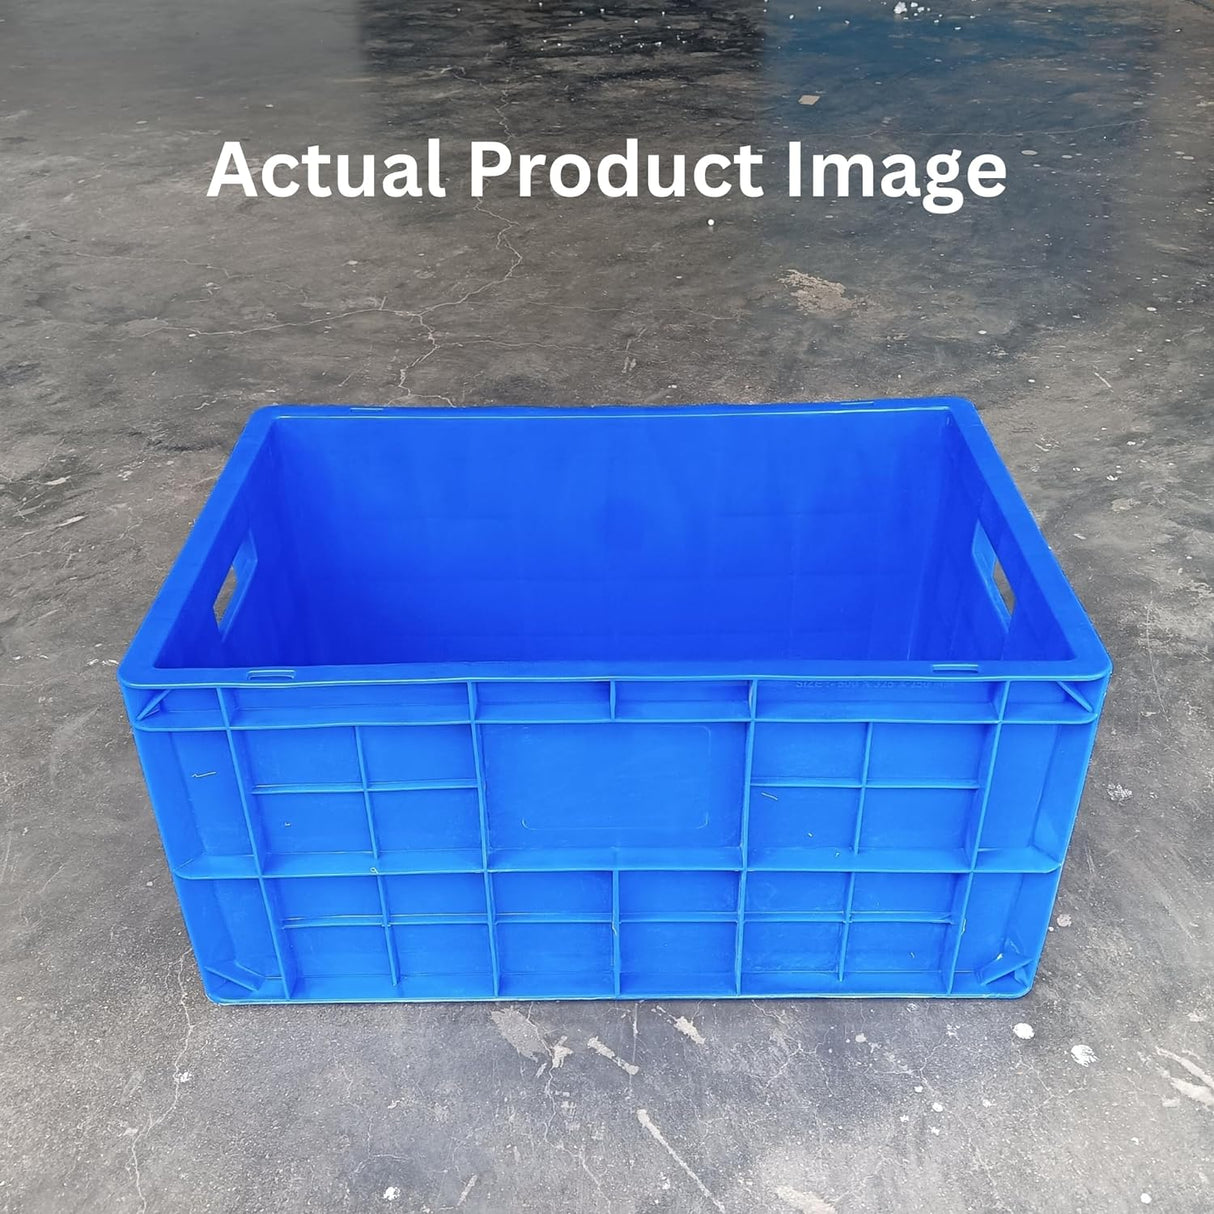 SINGHAL 50x32.50x25 CM - Multipurpose Storage Crates Heavy Duty Plastic Crate | Crates for storage | Shelf Basket, Big Large Storage Bin for Vegetable, Fruit, Milk Pack of 3 Pcs